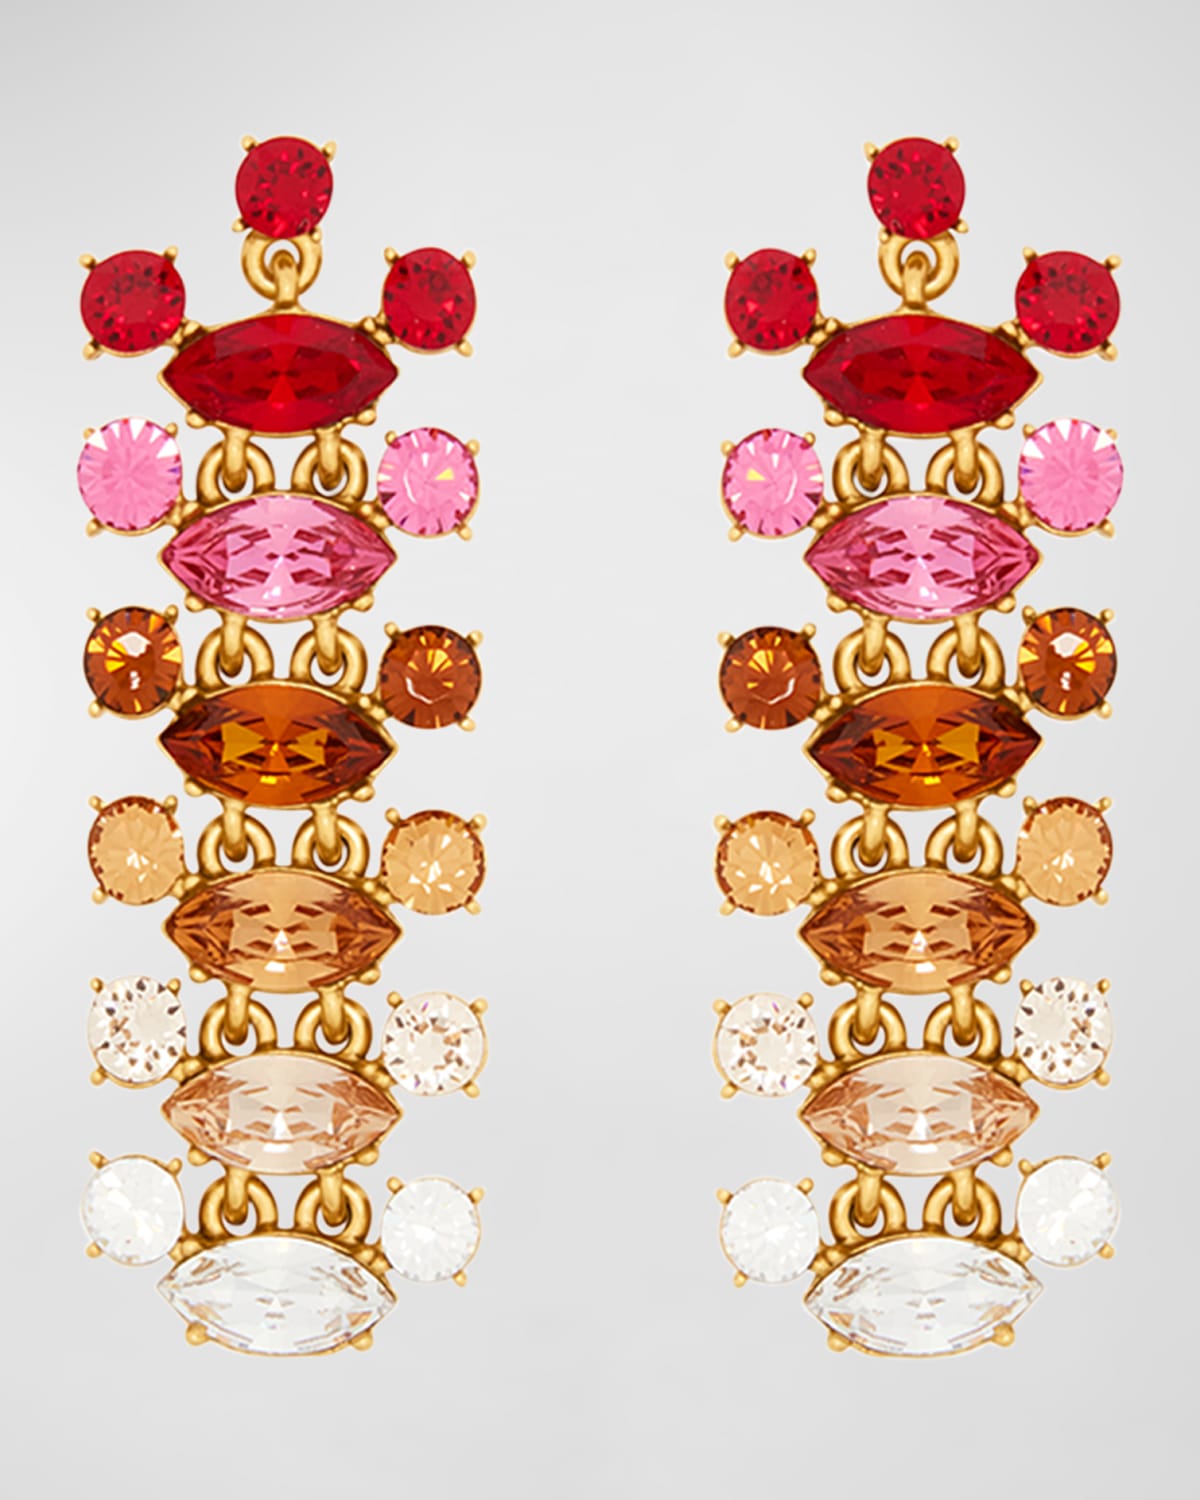 Abstract Crystal Chandelier Earrings